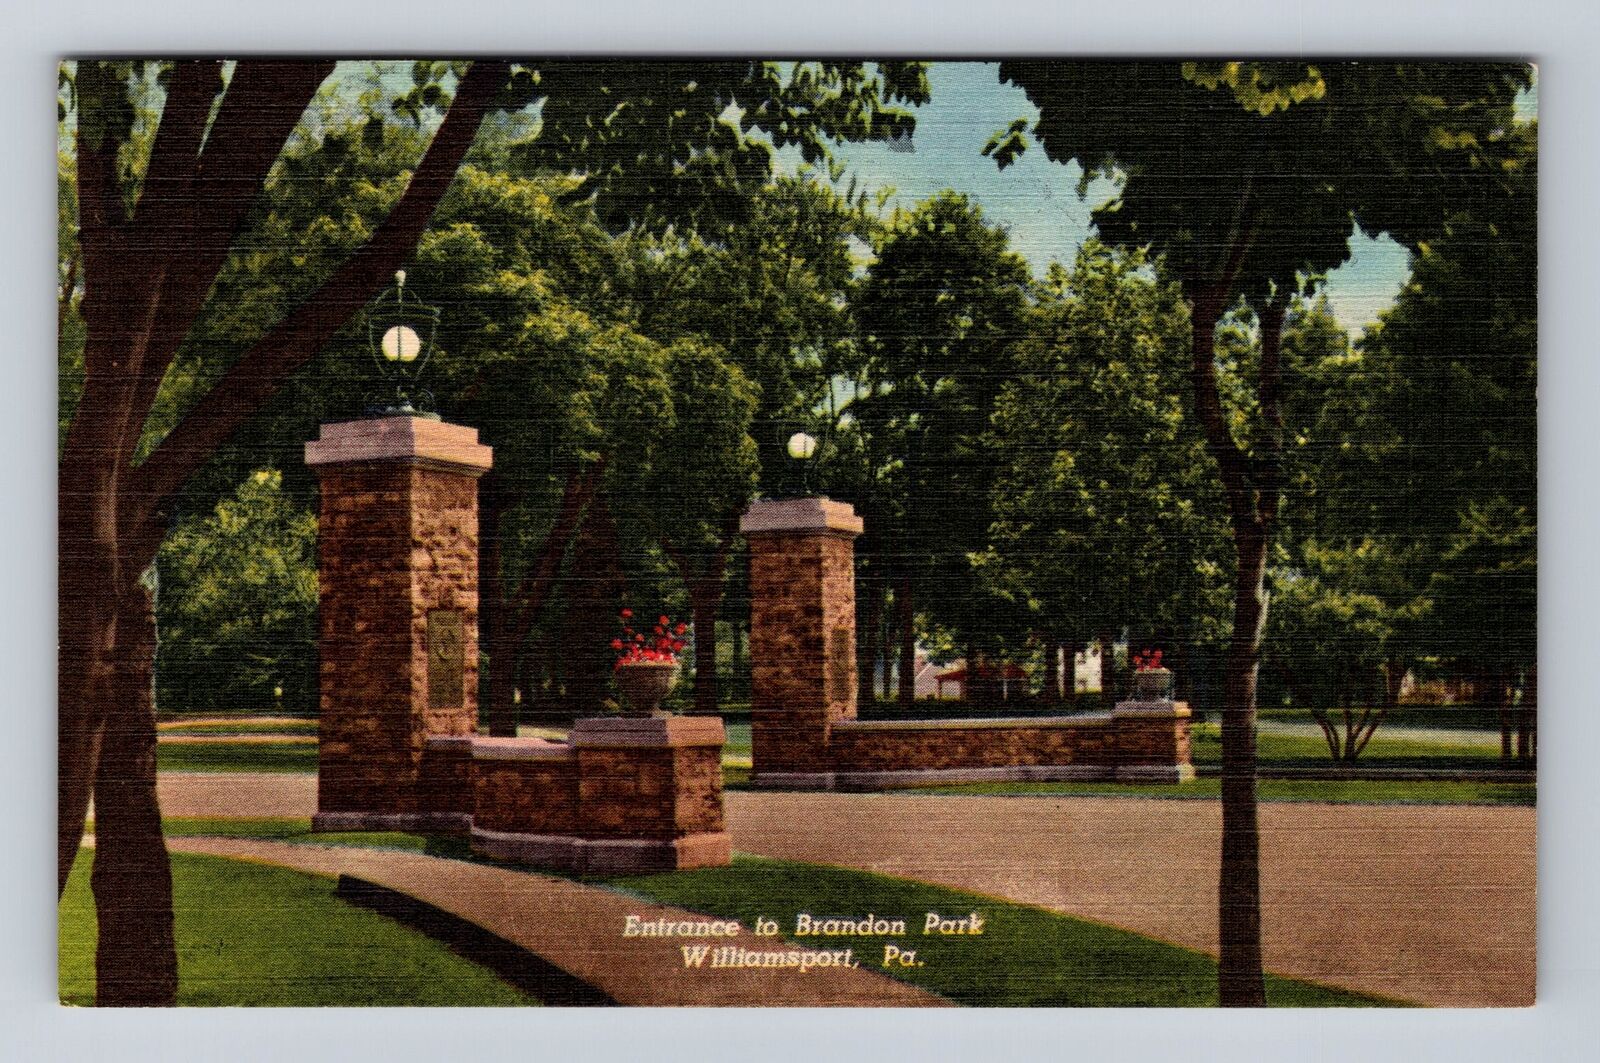 Williamsport PA-Pennsylvania, Entrance To Brandon Park, Vintage Postcard